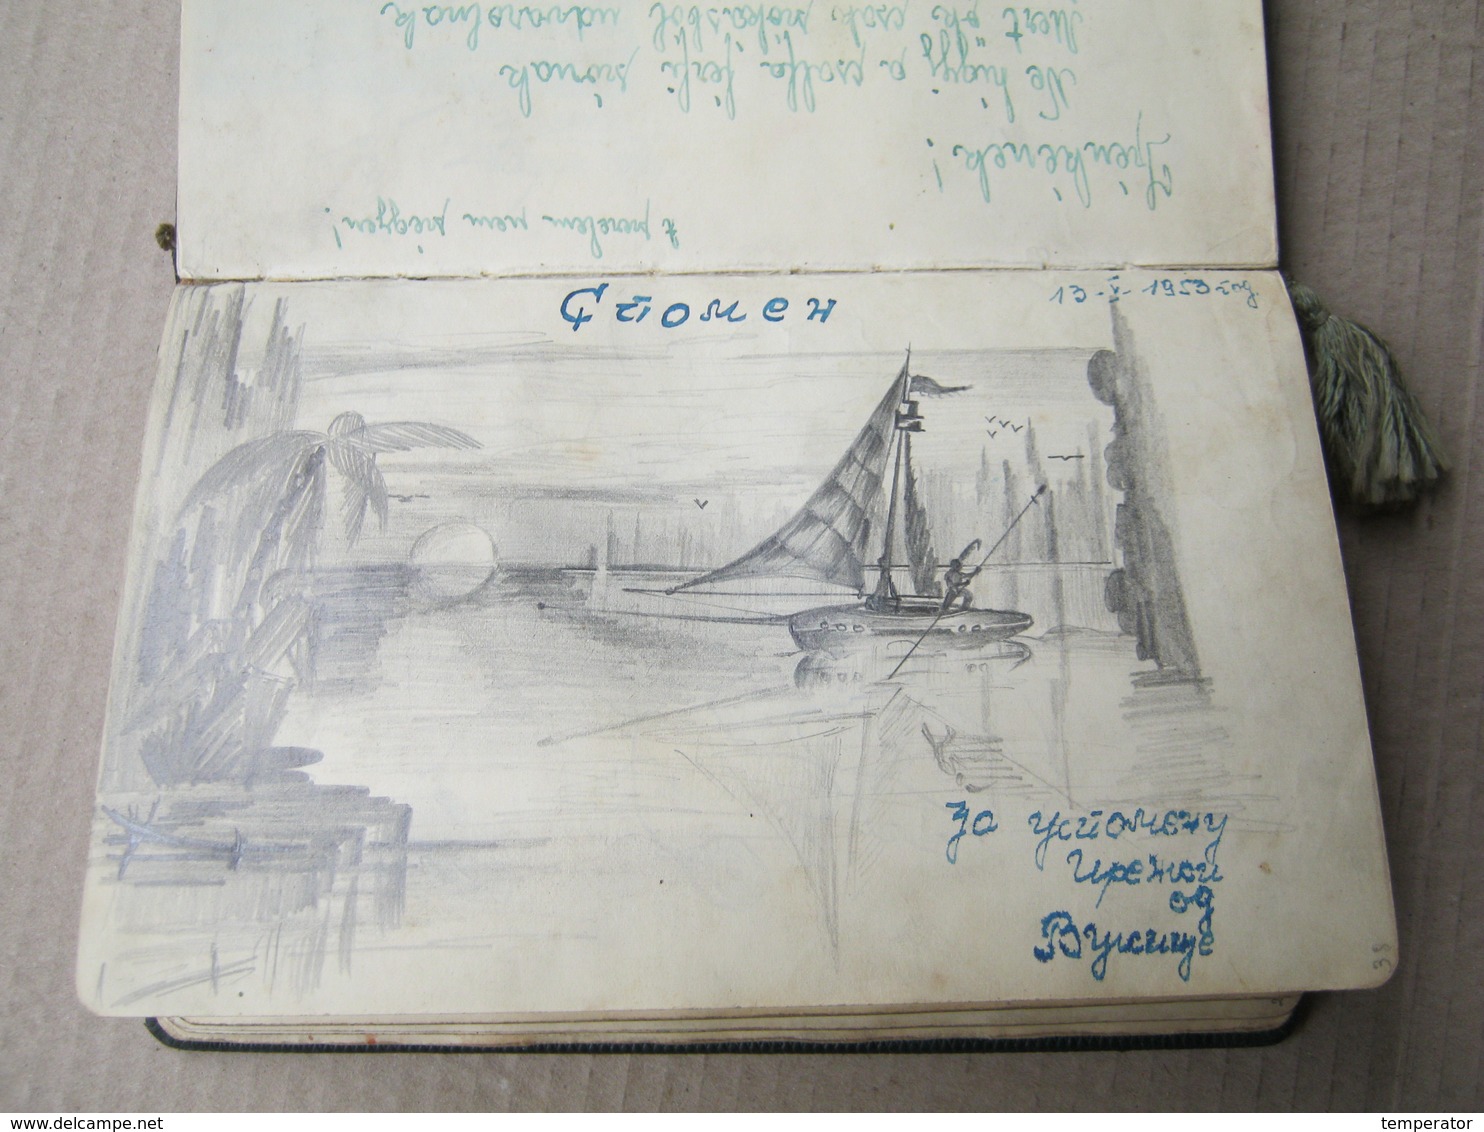 Scrapbook, Spomenar - Zrenjanin, Török Becse, Rovinj - Wonderful drawings, 1943/54.